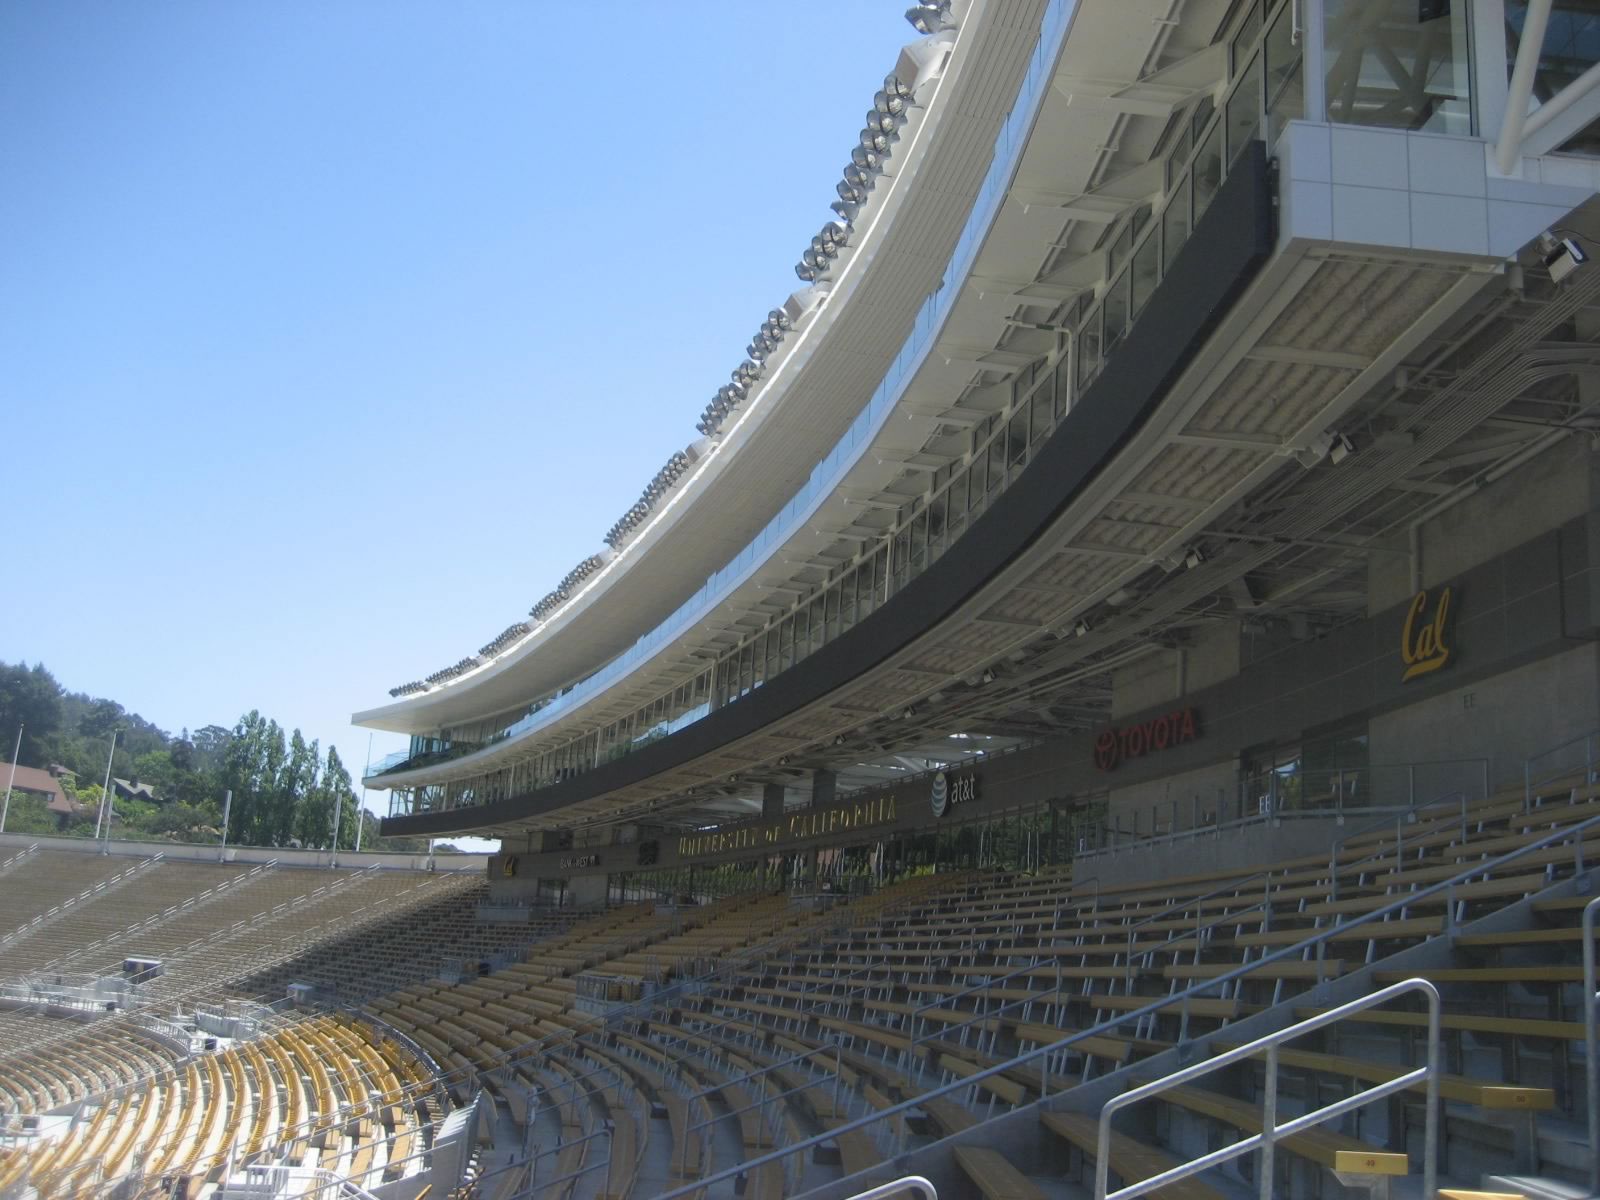 Kabam Field At California Memorial Stadium Seating Chart